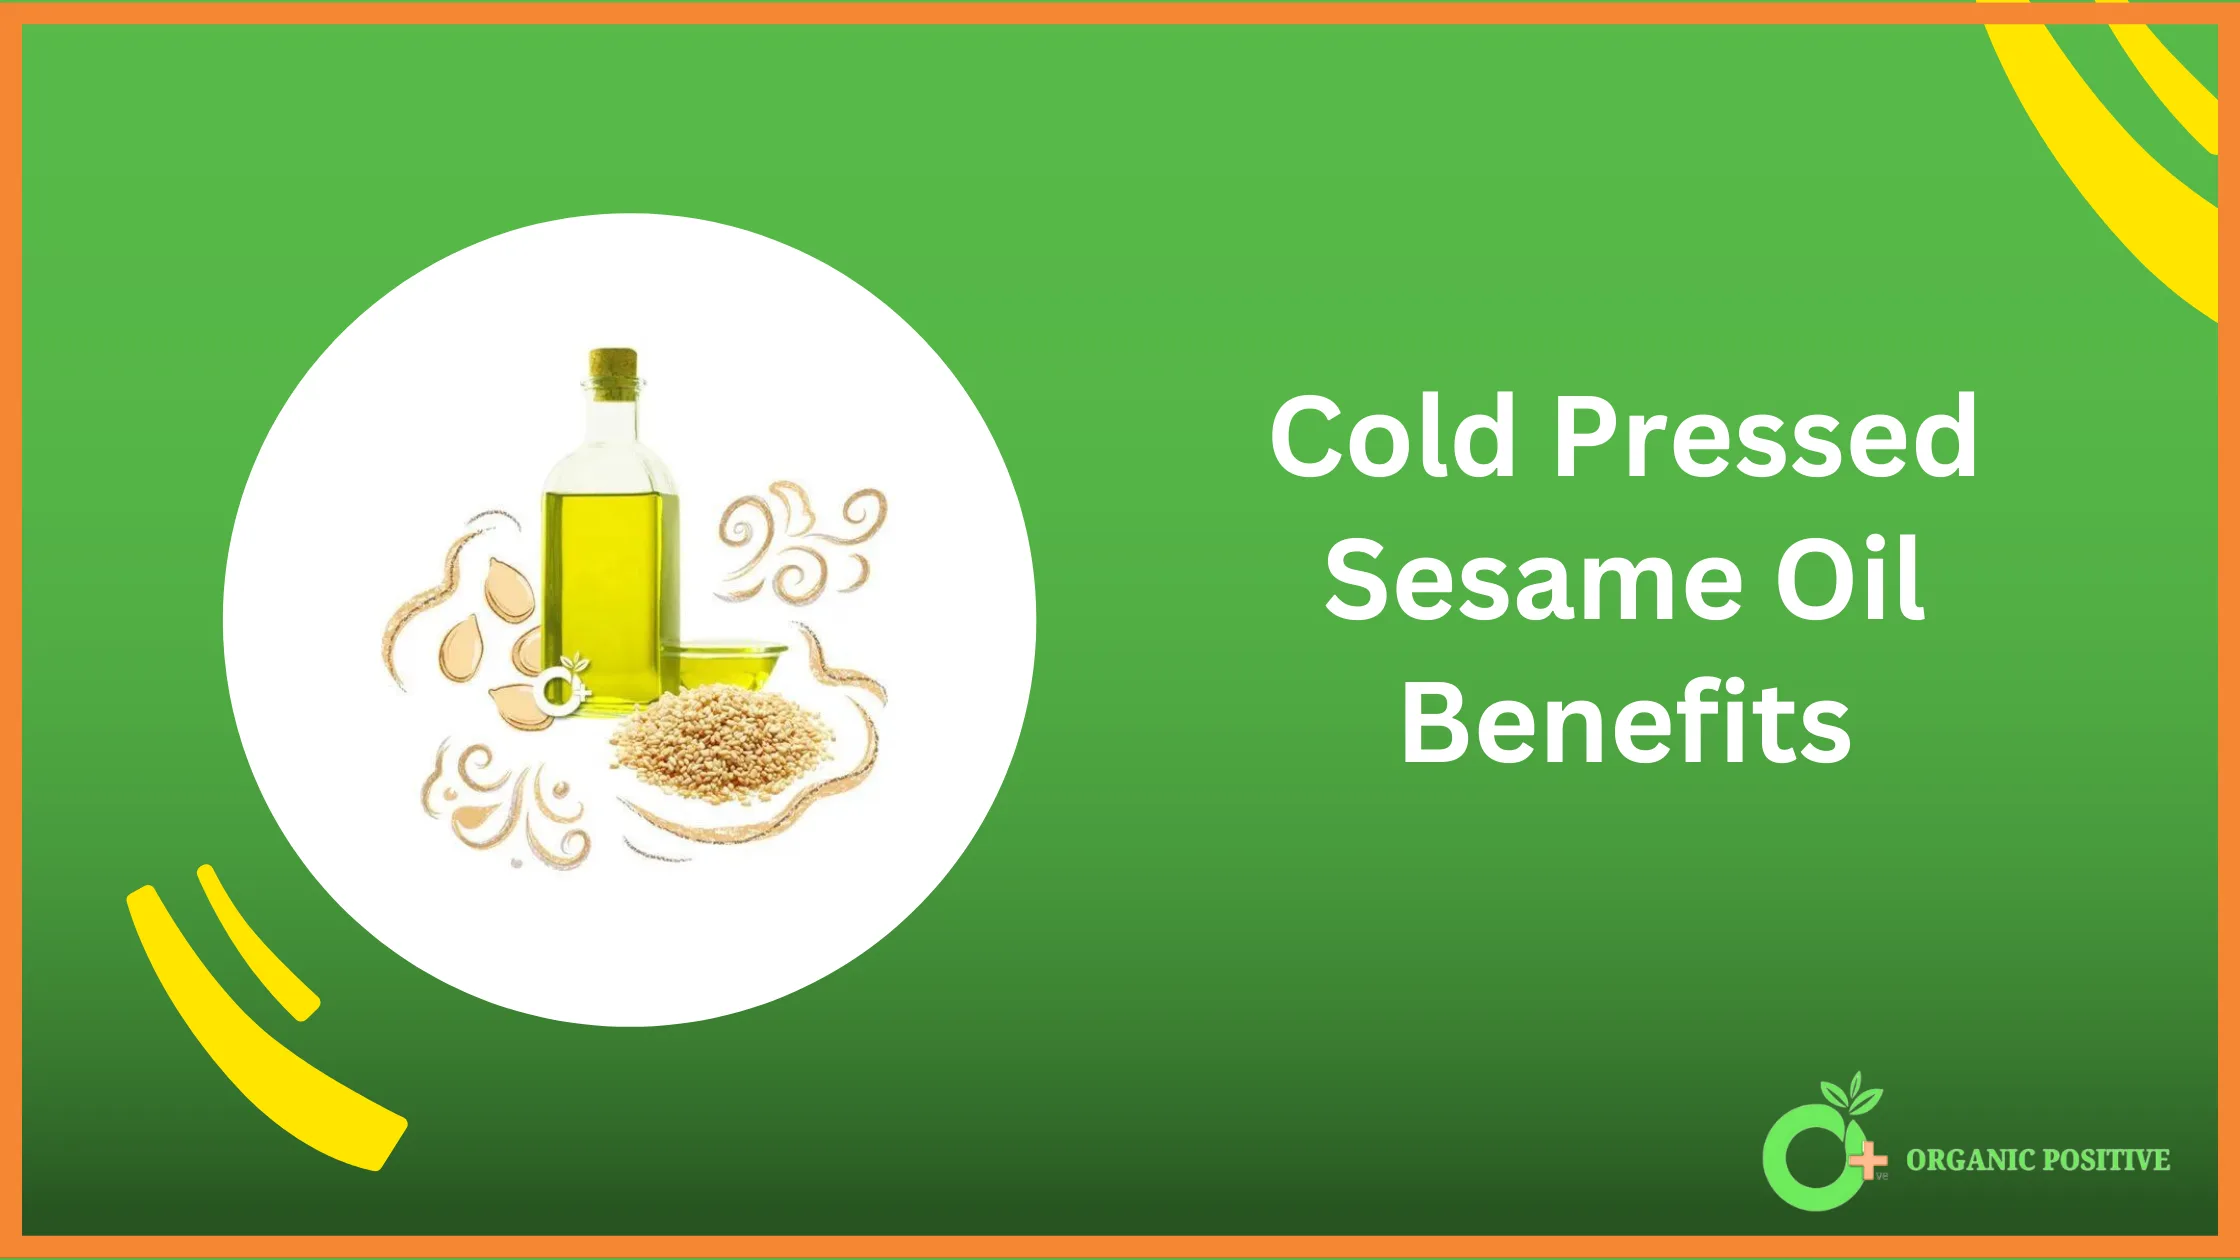 Cold Pressed Sesame Oil Benefits